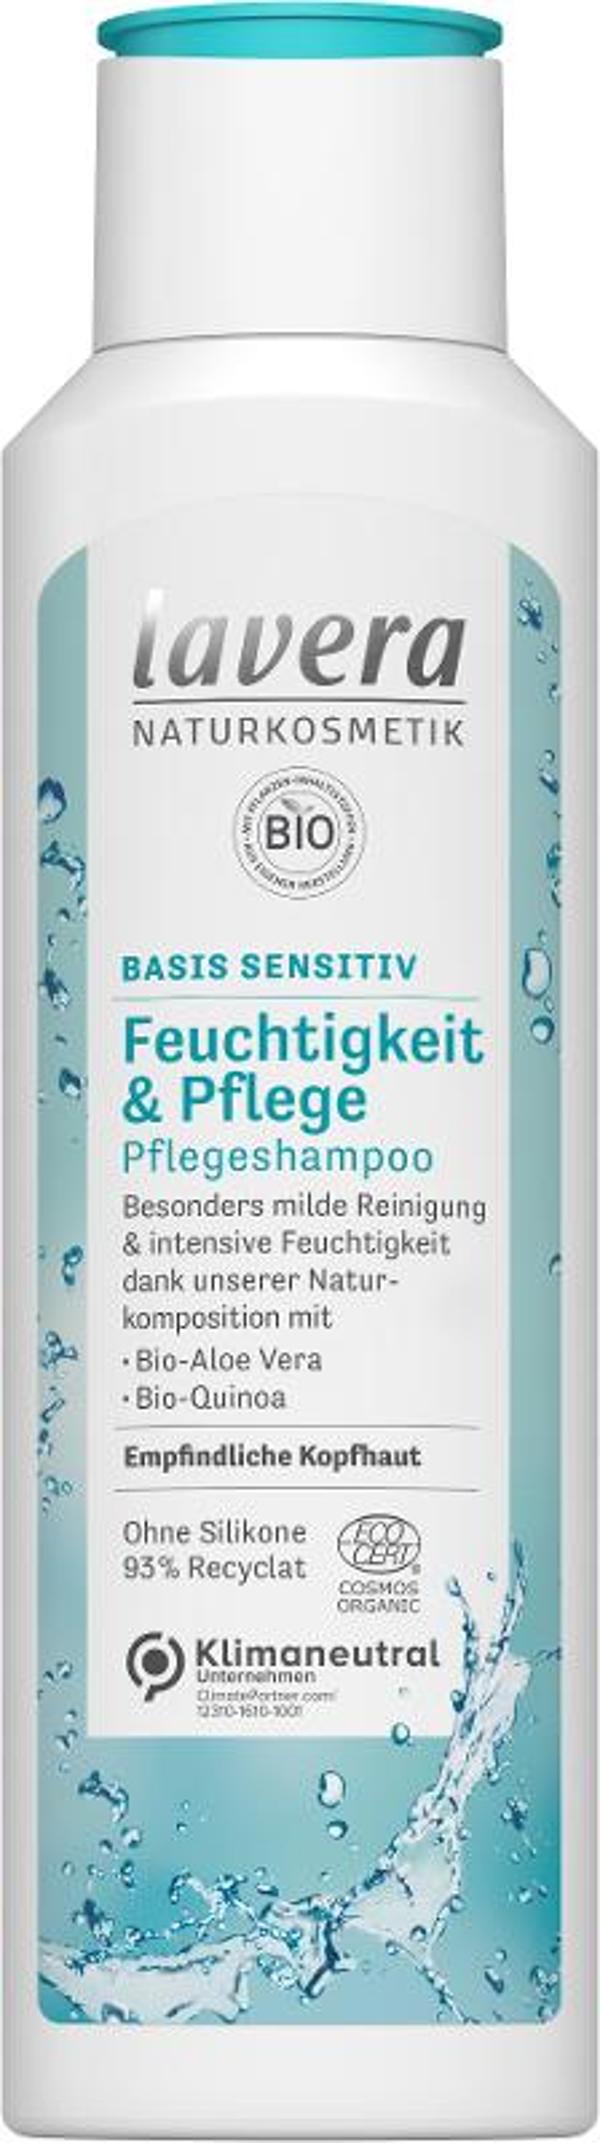 Produktfoto zu Shampoo basis sensitiv Feuchtigkeit